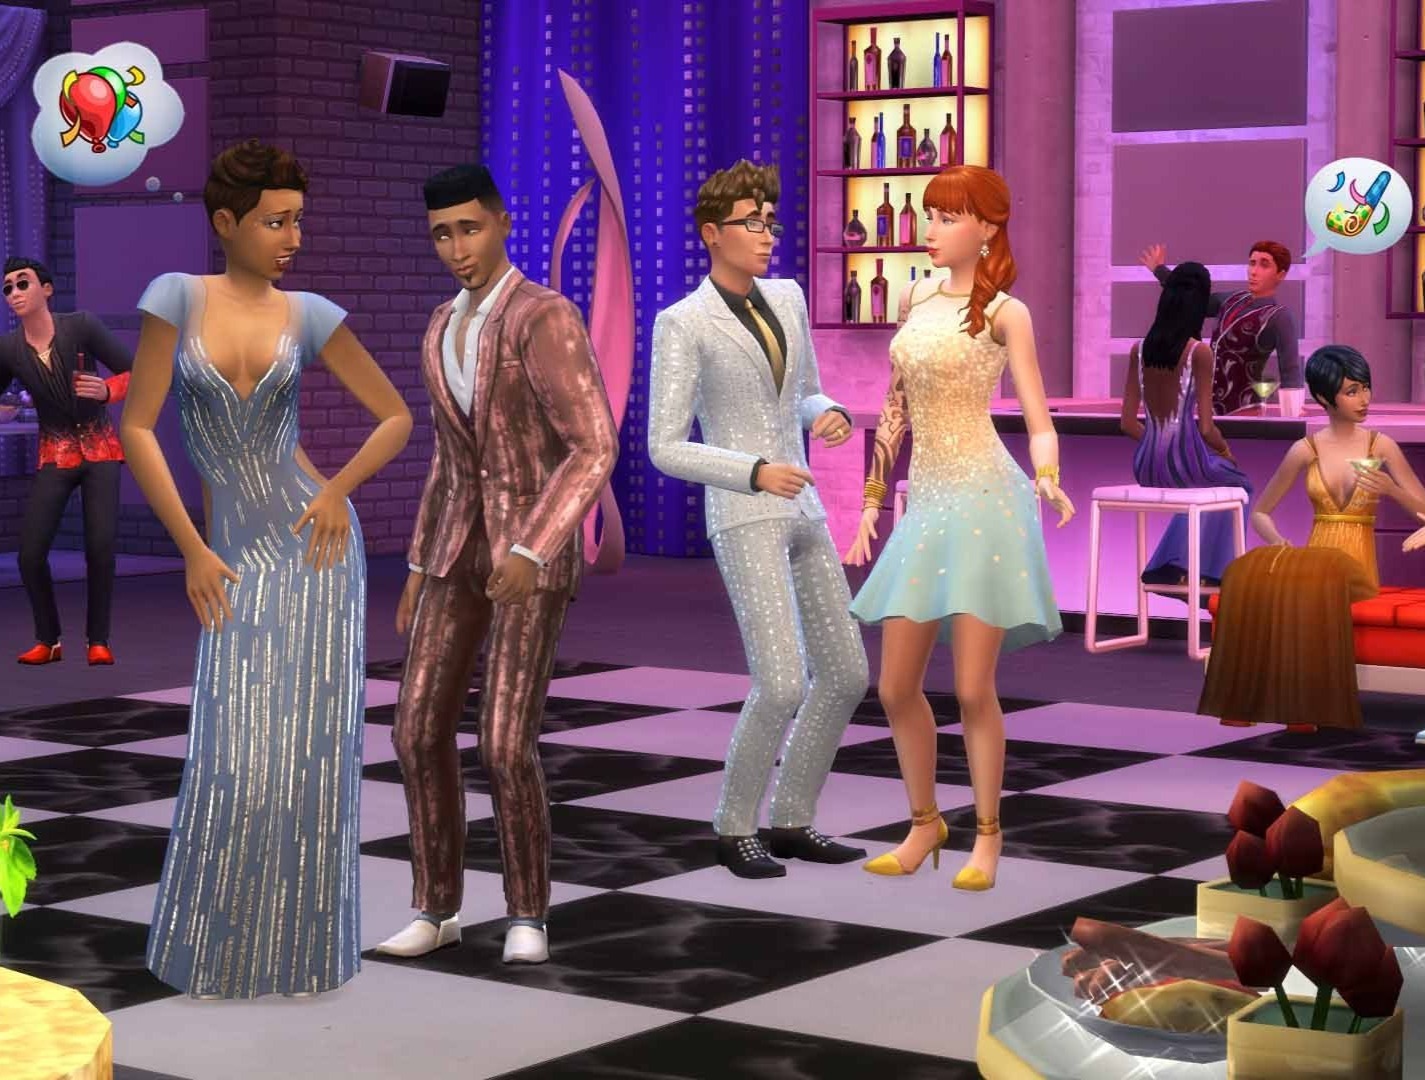 The Sims 4 Luxury Party Stuff Origin CD Key bg